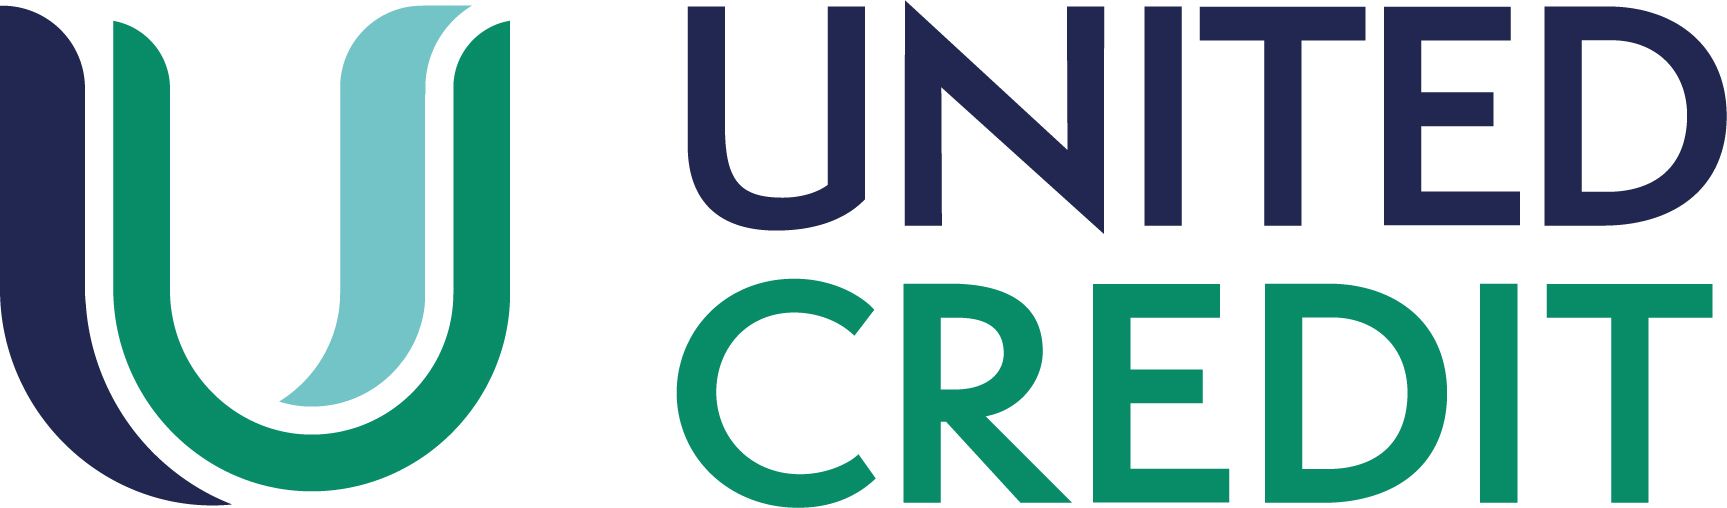 United Medical Credit